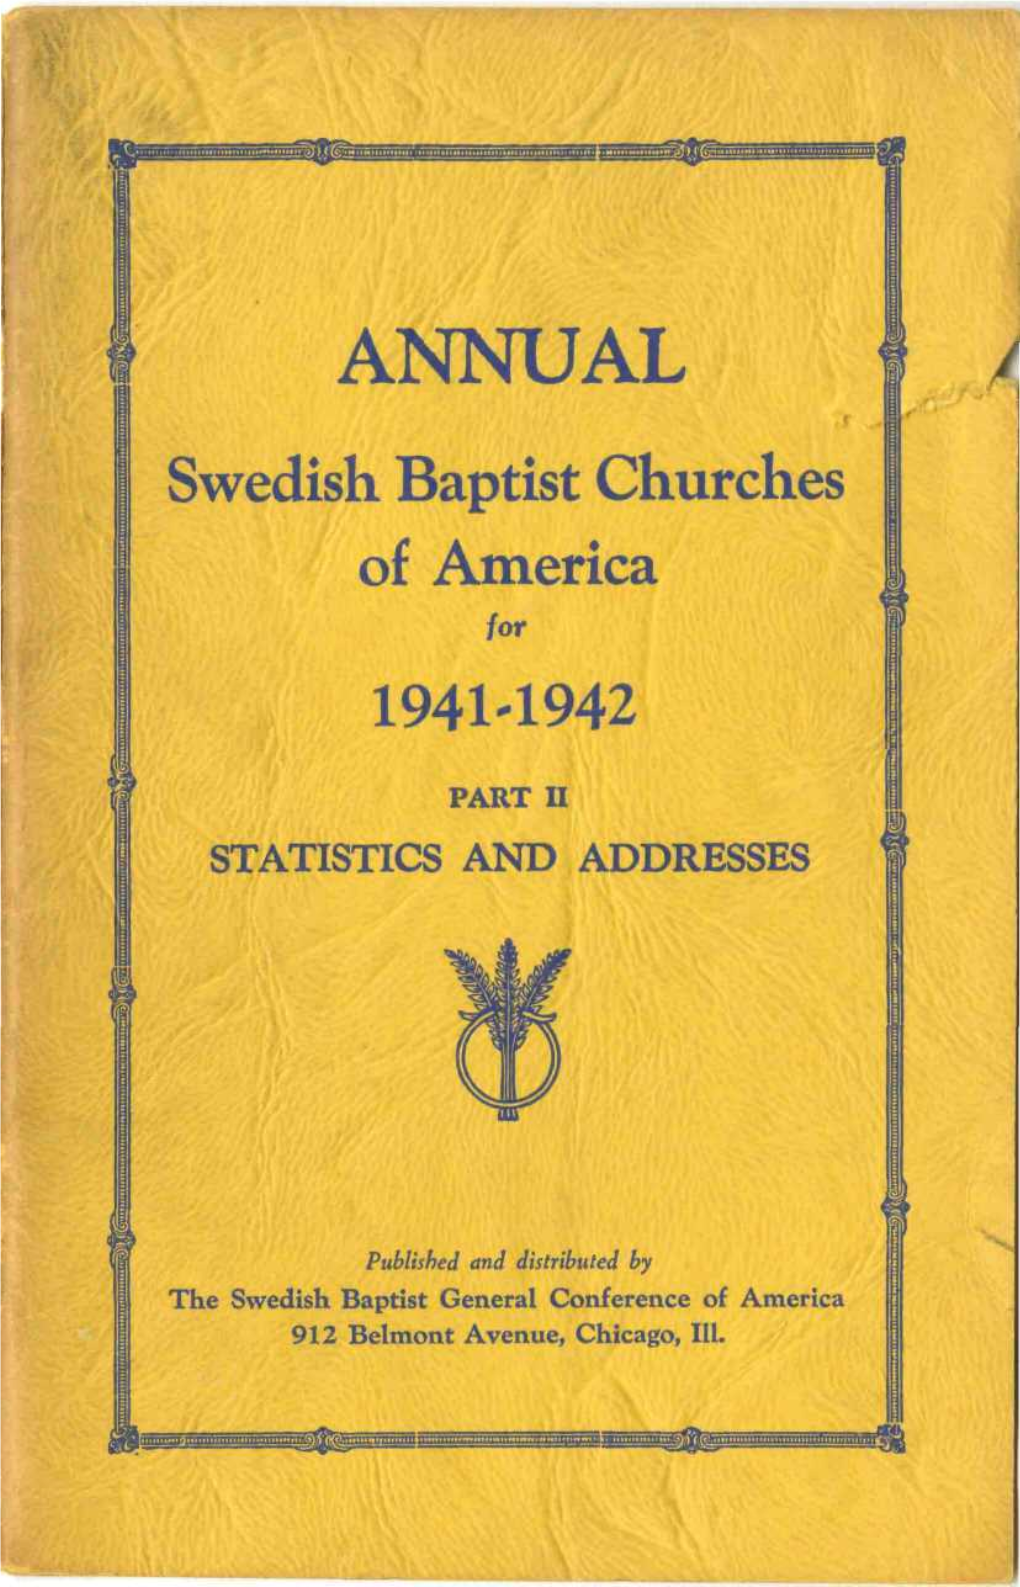 ANNUAL Swedish Baptist Churches of America for 19414942